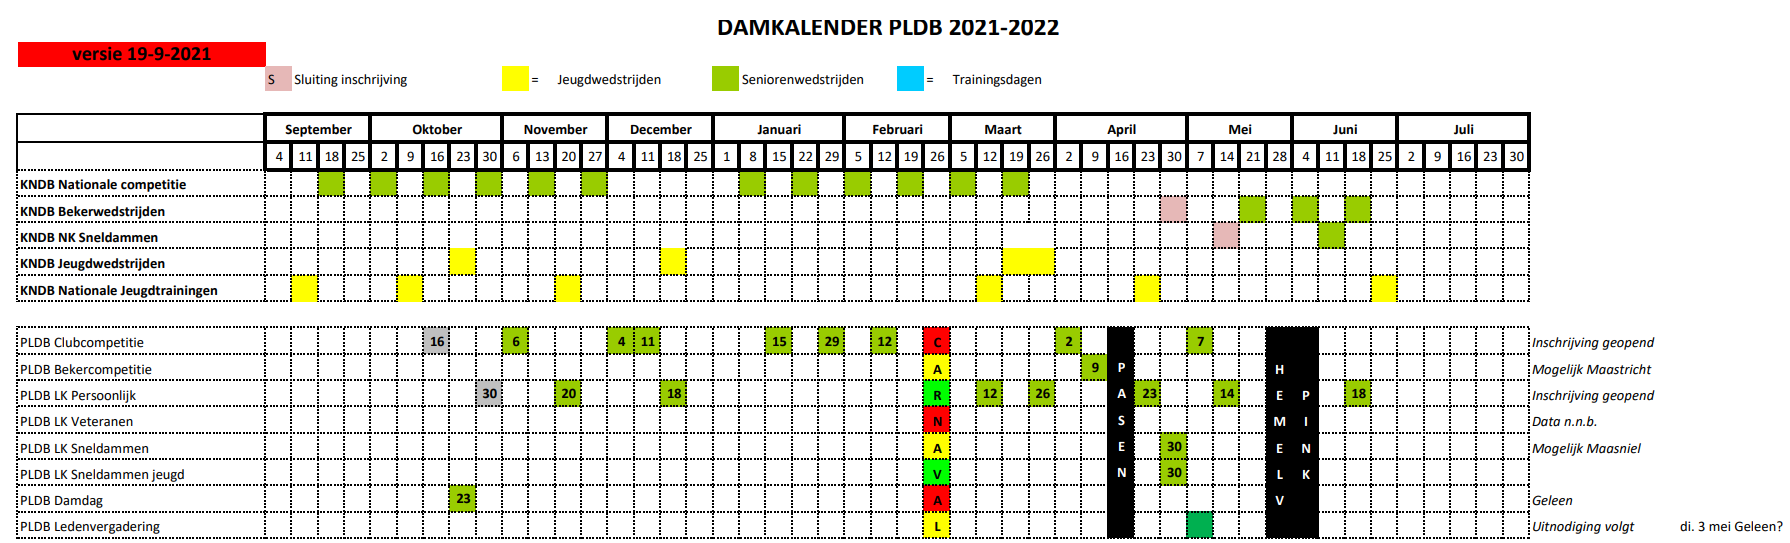 damkalender 2021-2022.PNG